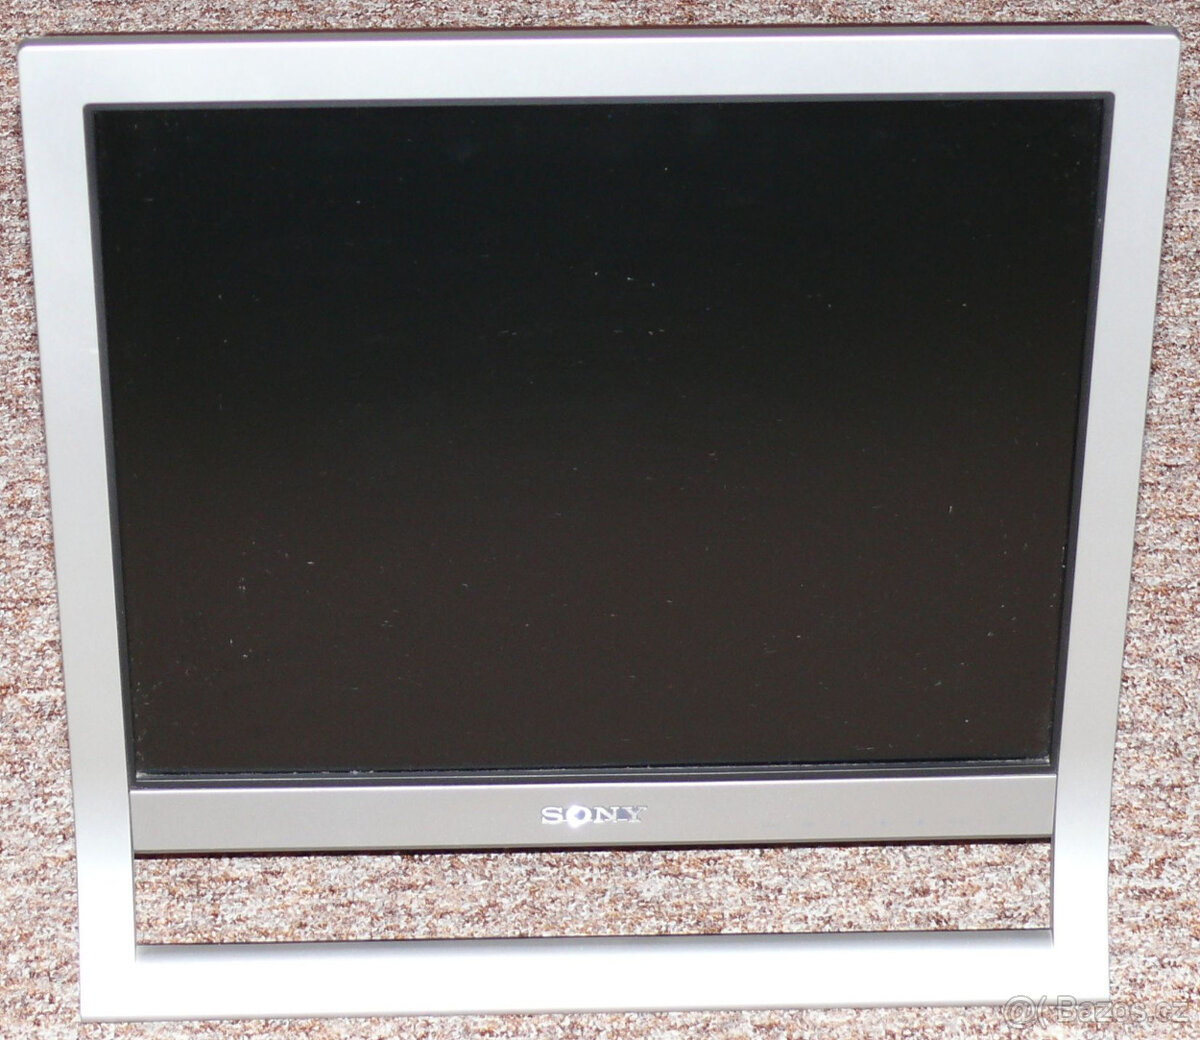 Sony SDM-HS75D LCD monitor 17"